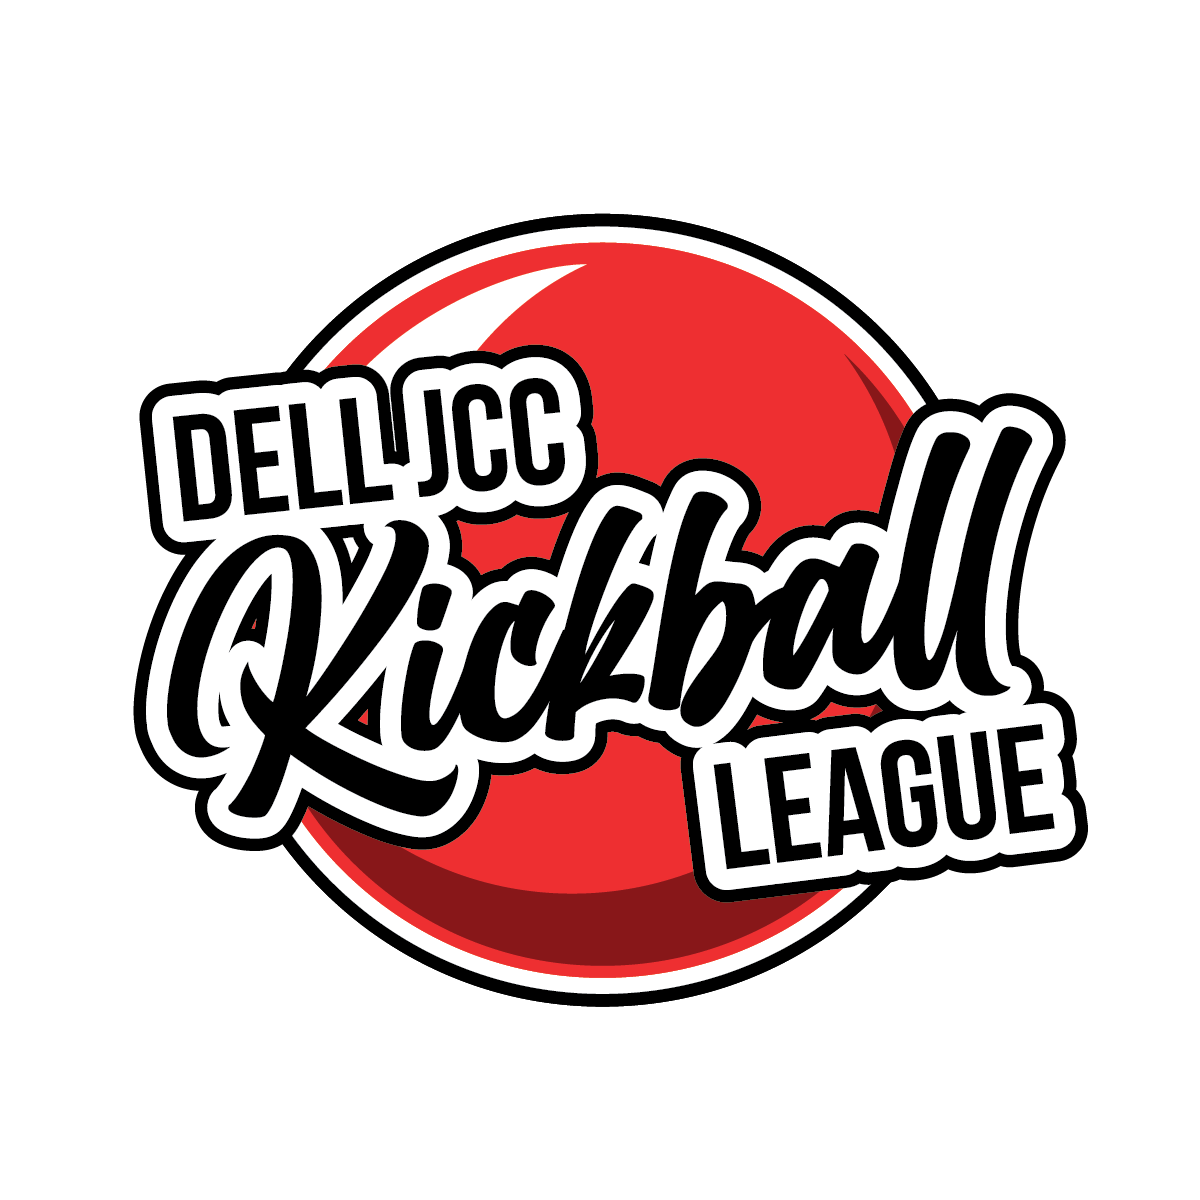 DellJCC_Kickball_TextTreatment_2023-01.png